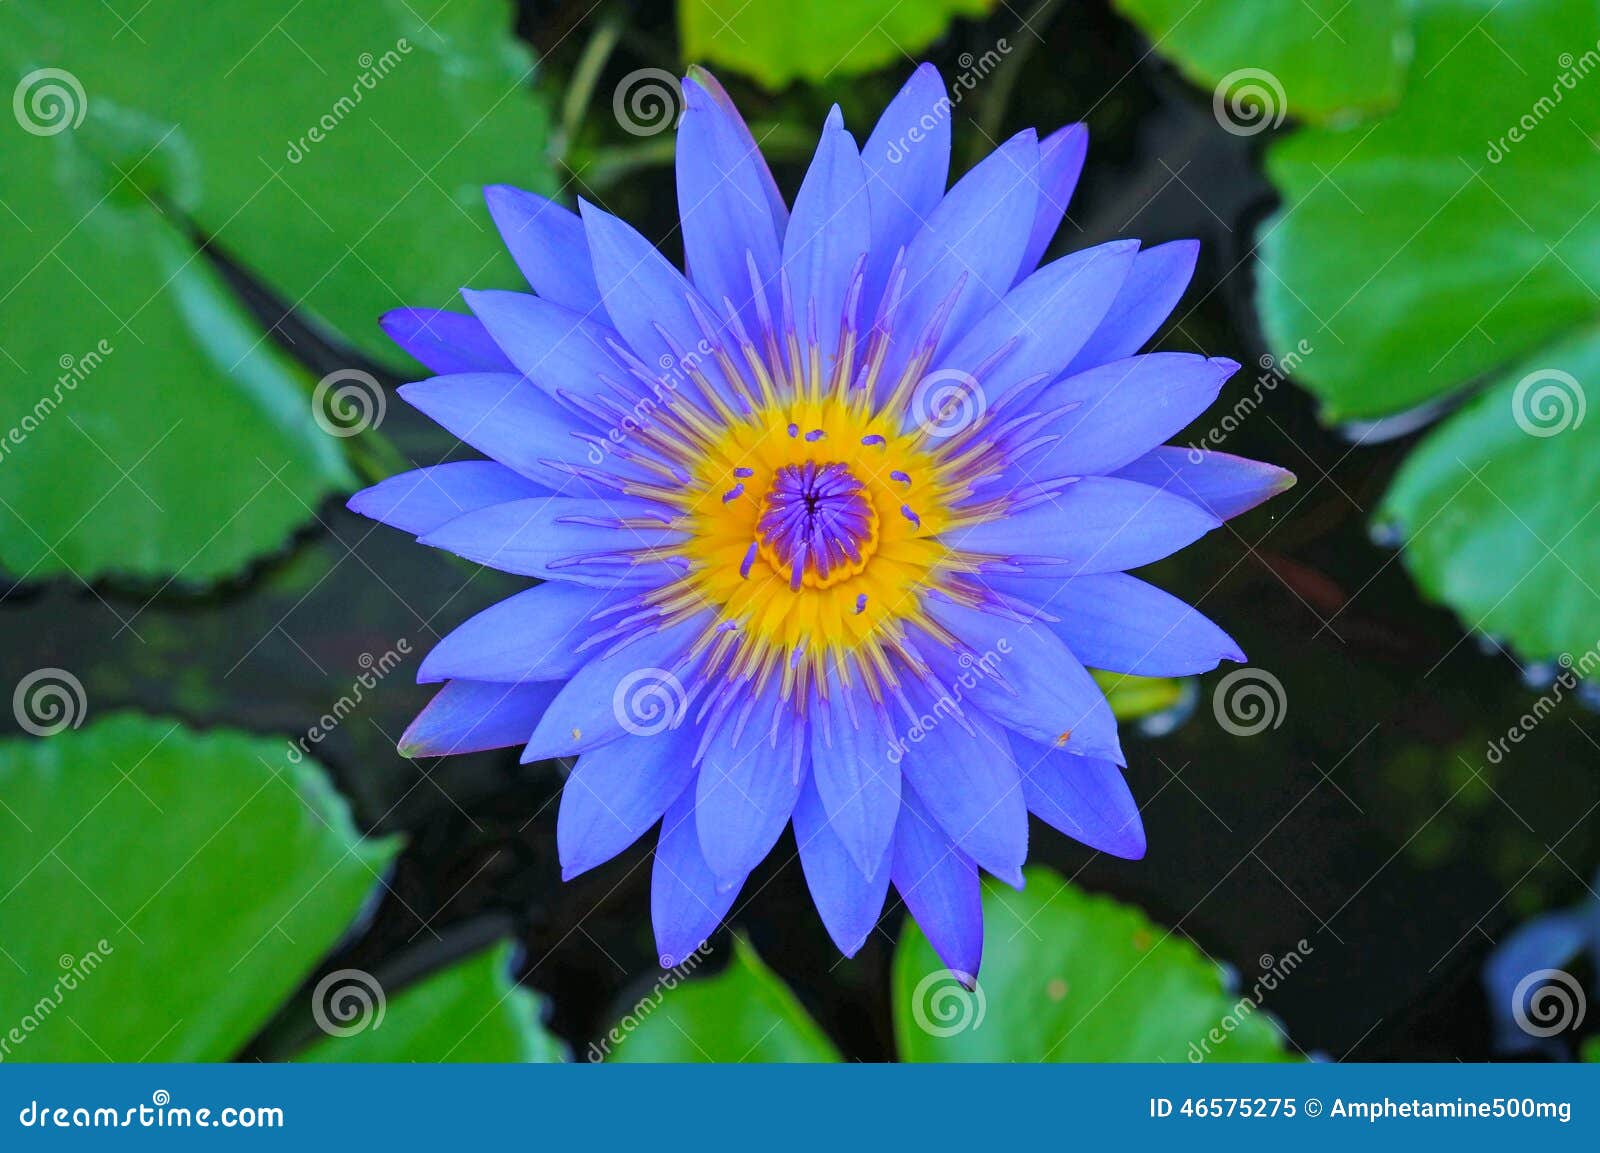 blue lotus flower blue lotus flower photos